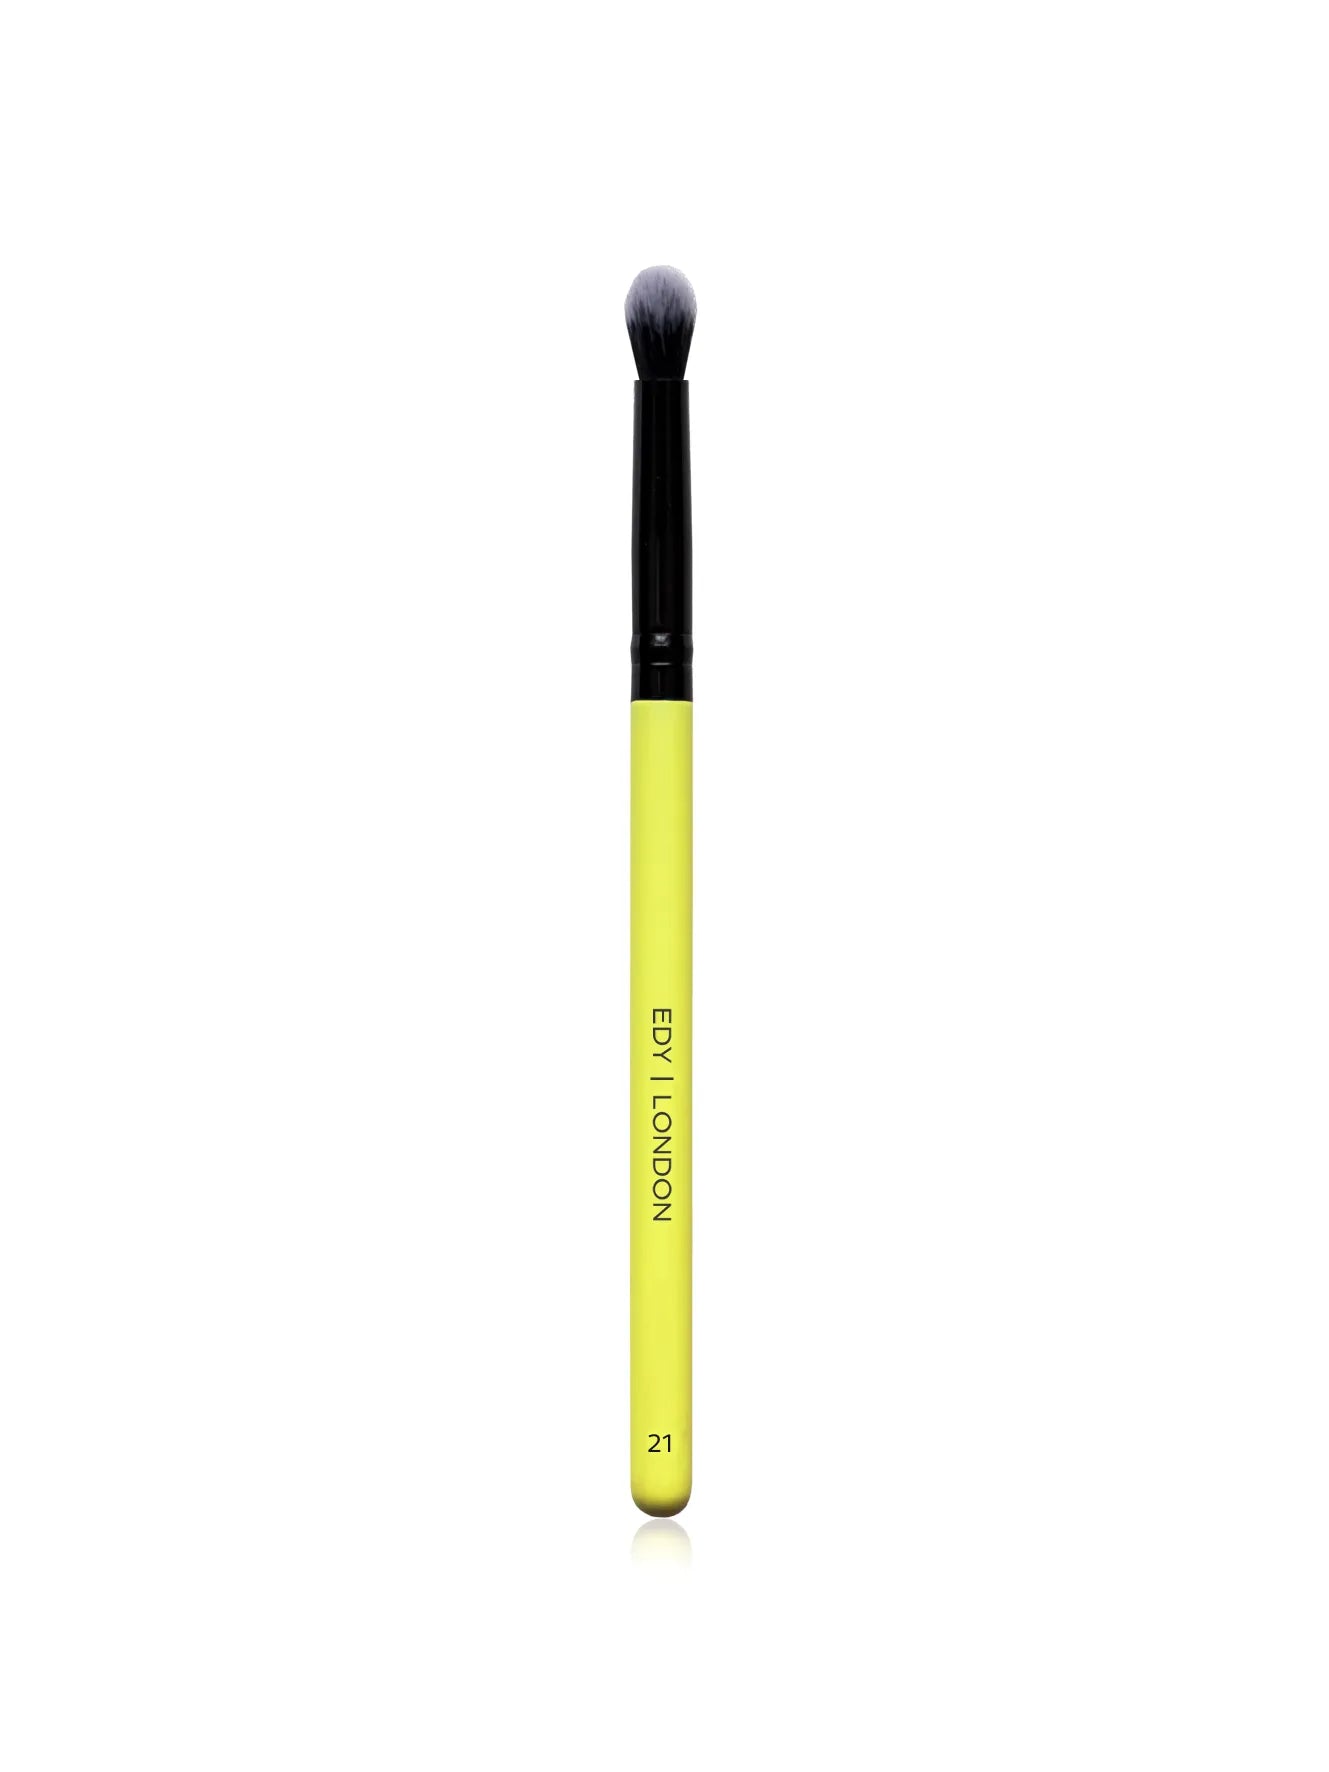 Tapered Blender Brush 21 Make-up Brush EDY LONDON Lemon   - EDY LONDON PRODUCTS UK - The Best Makeup Brushes - shop.edy.london